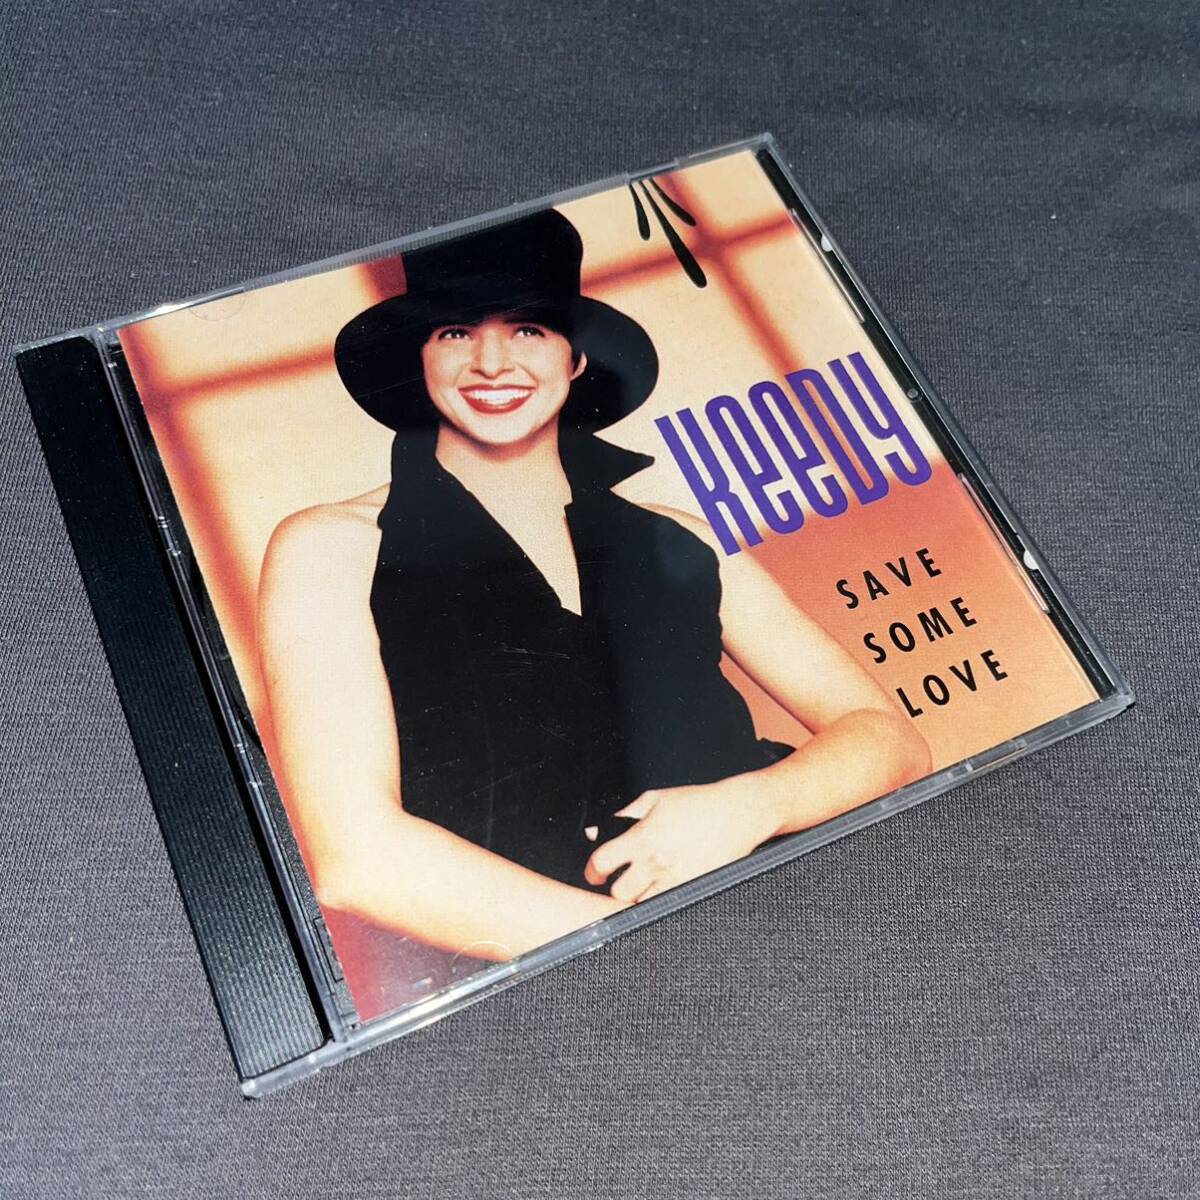 KEEDY / Save Some Love (Remixes) US盤 Promo CD Single (ASCD-2194) キーディ /そよ風のキッス_画像1